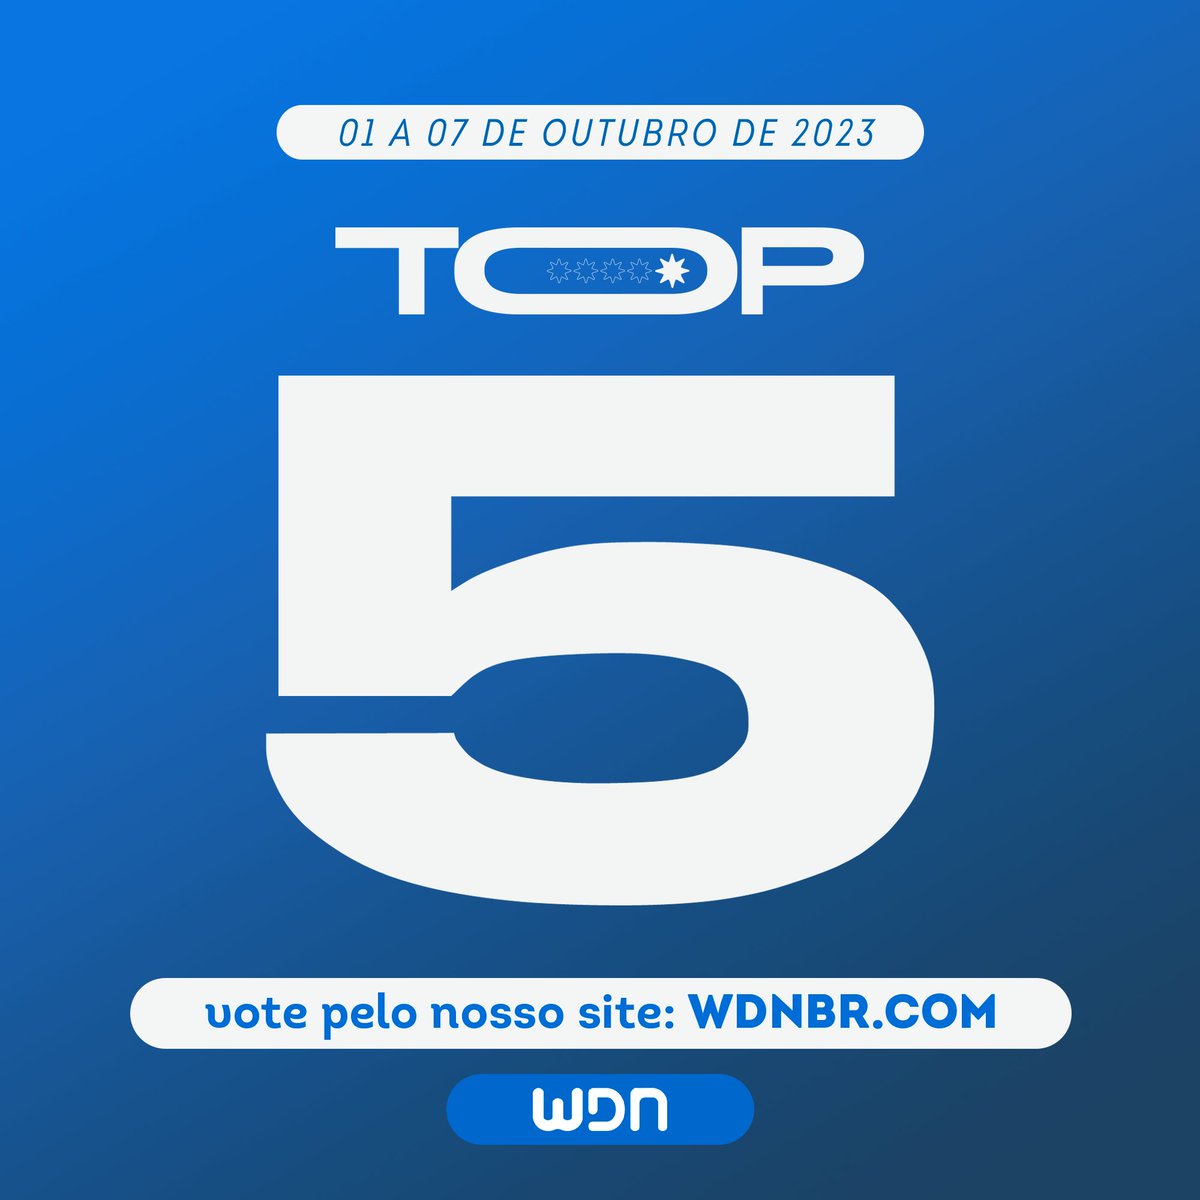 WDN - World Dubbing News on X: 🍂 NOVO EPISÓDIO DUBLADO